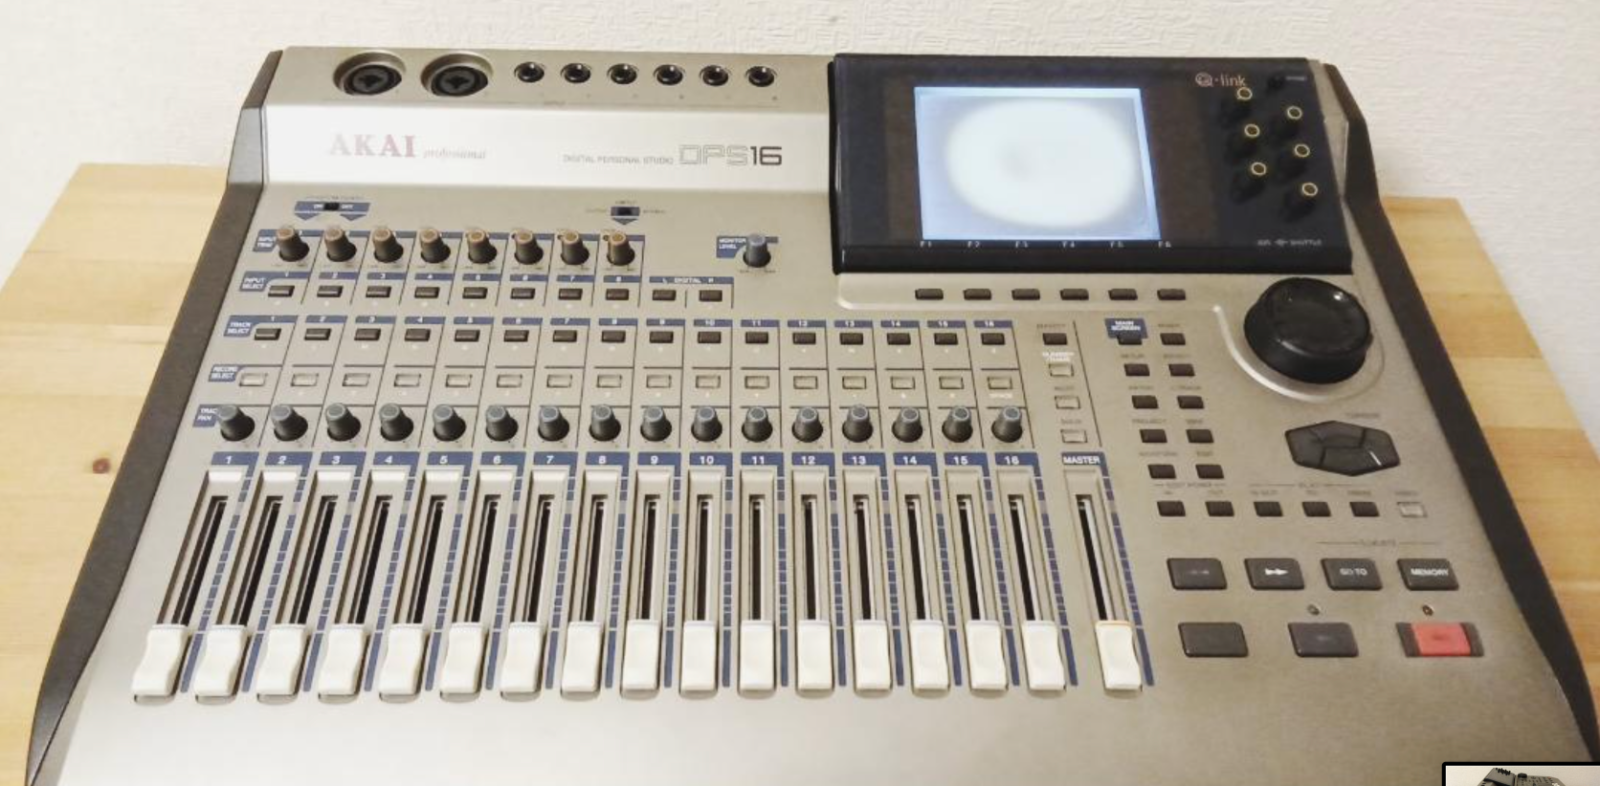 Akai DPS-16 Digital Multitrack Recording Console 24bit / 96kHz HDR 